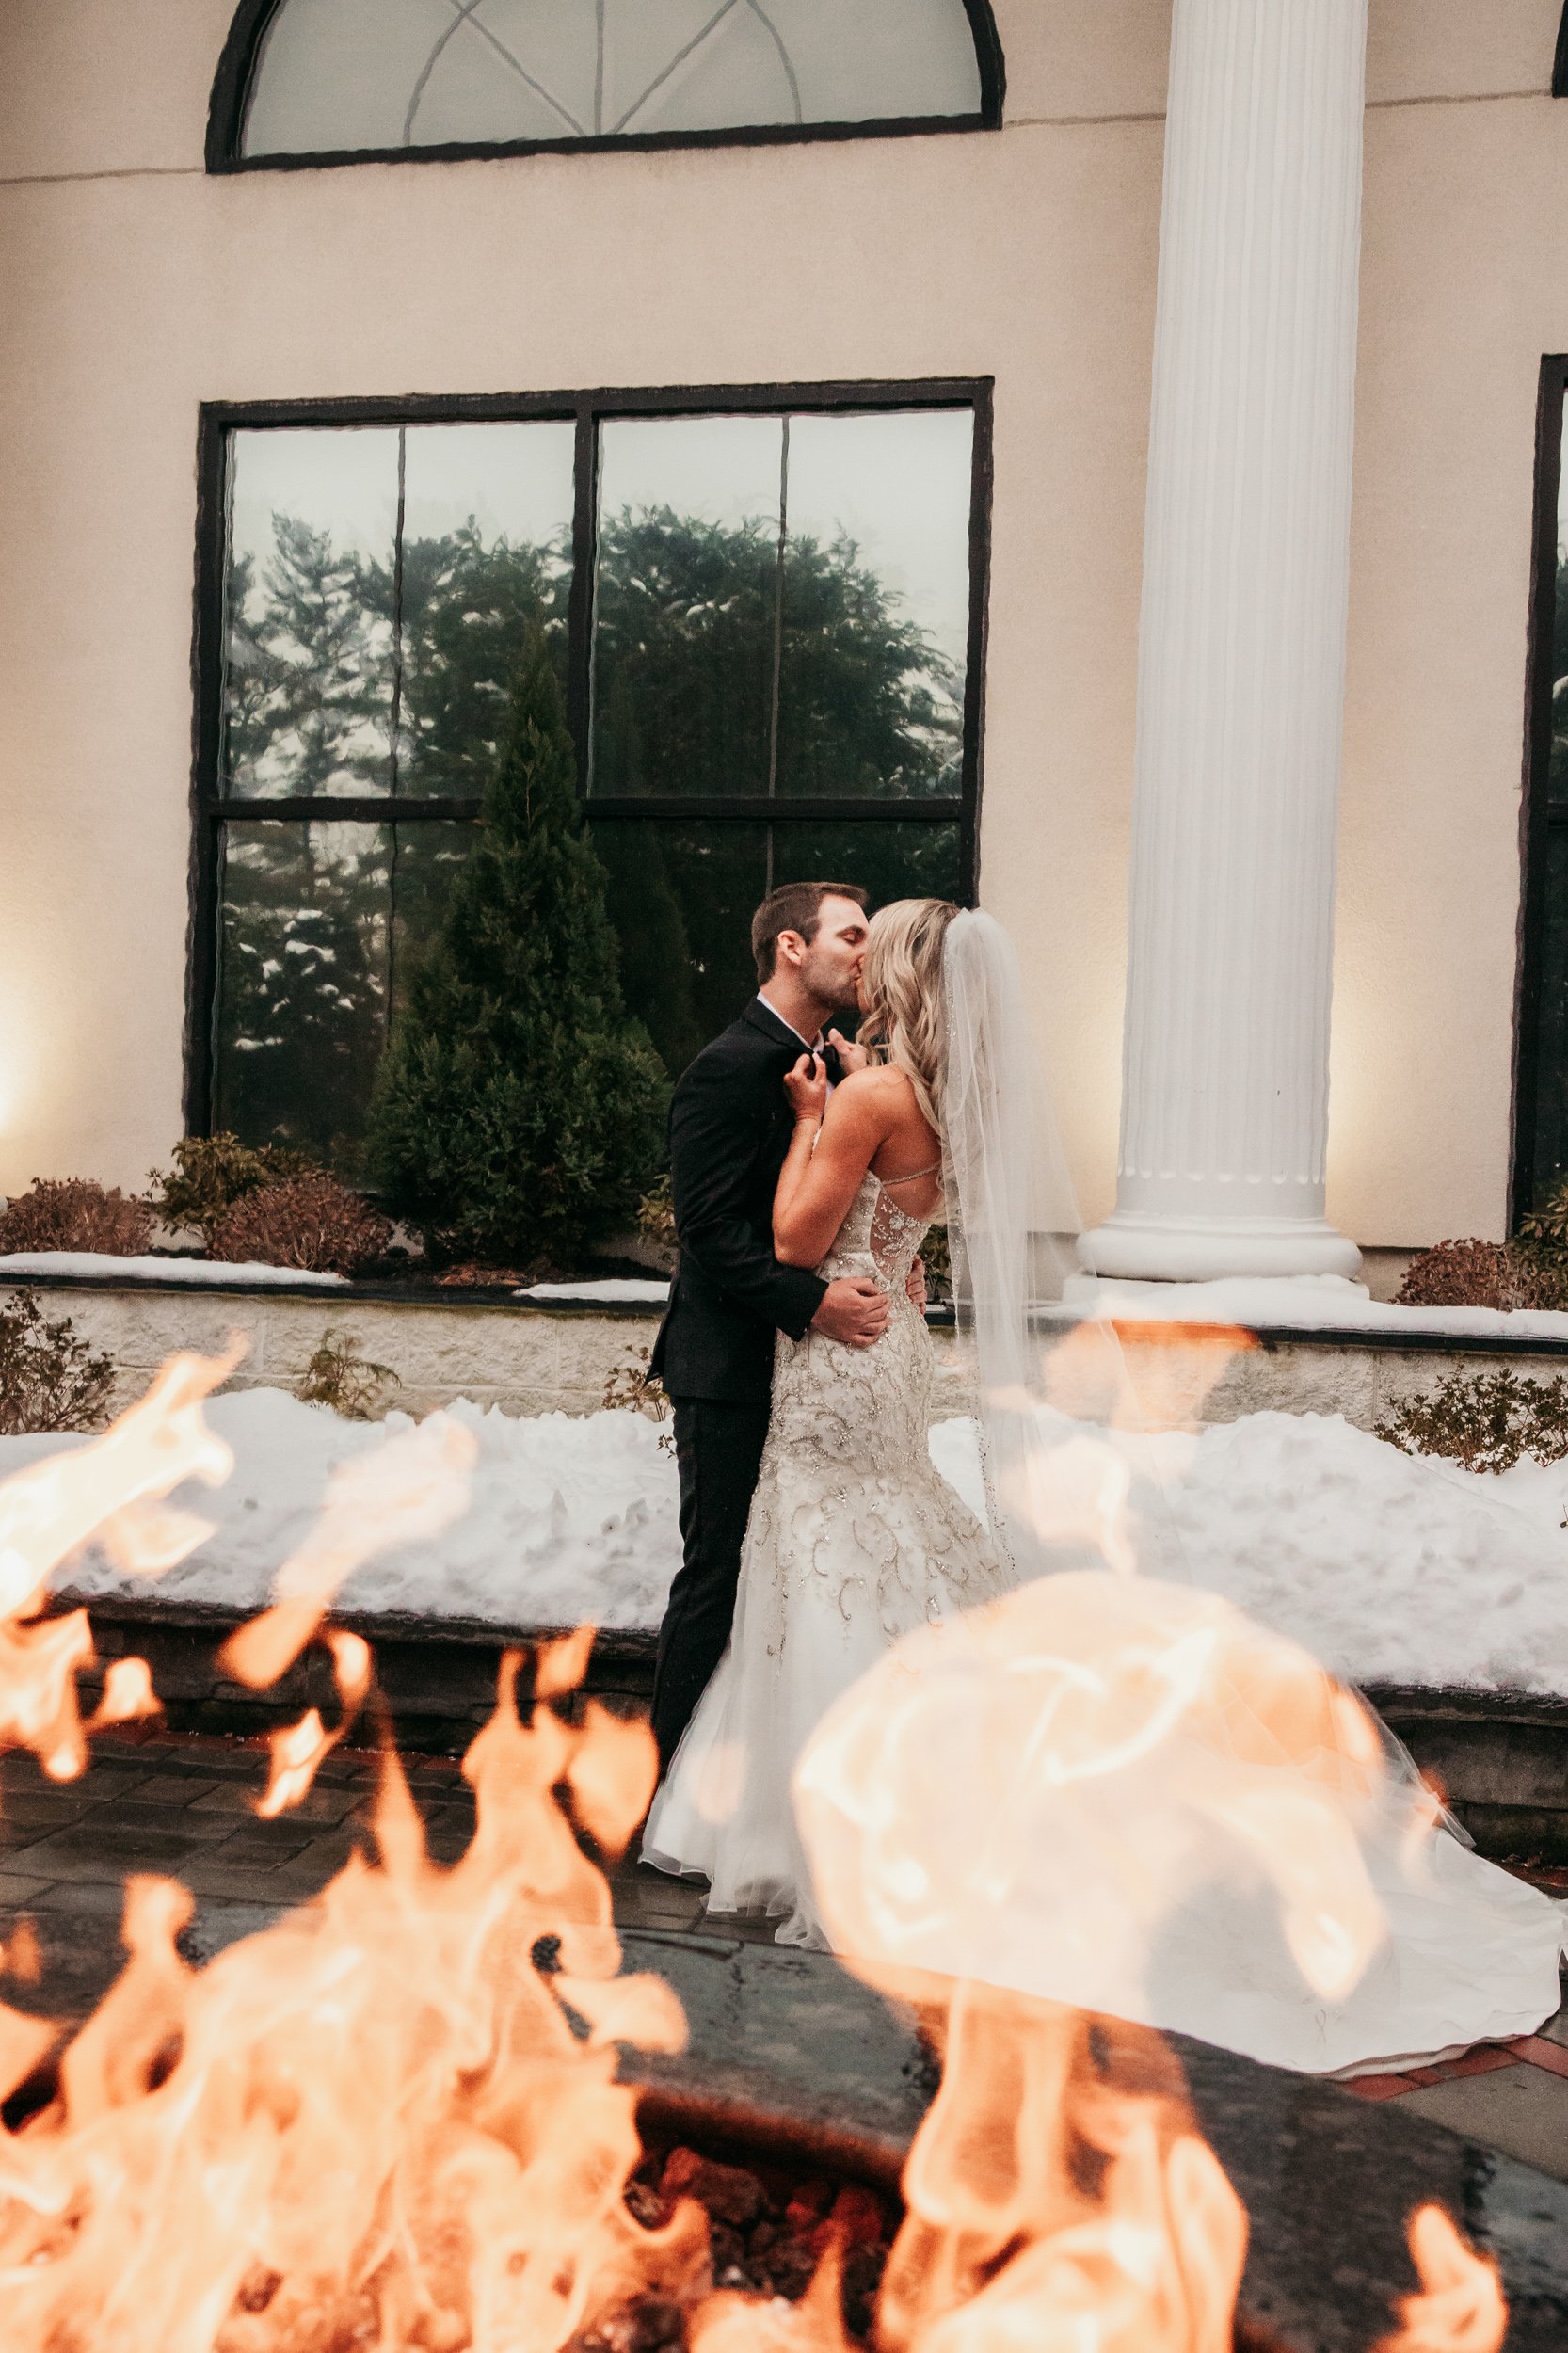 LUCEINS MANOR WEDDING PHOTOGRAPHY - FEB 2021 - 57.jpg